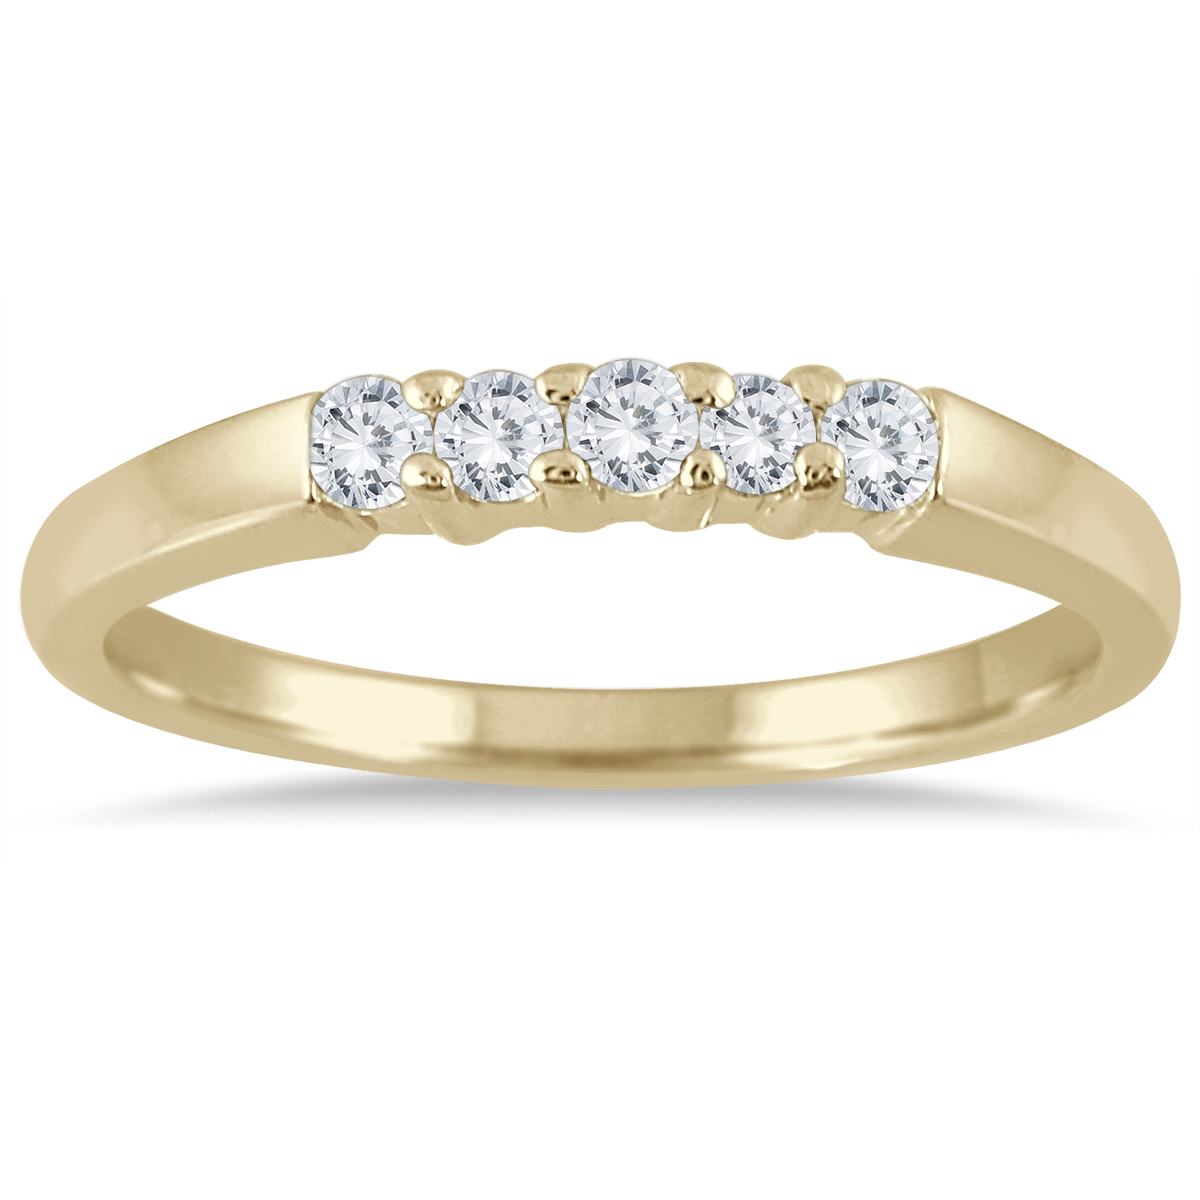 szul.com 1/4 Carat TW Five Stone Diamond Wedding Band in 10K Yellow Gold